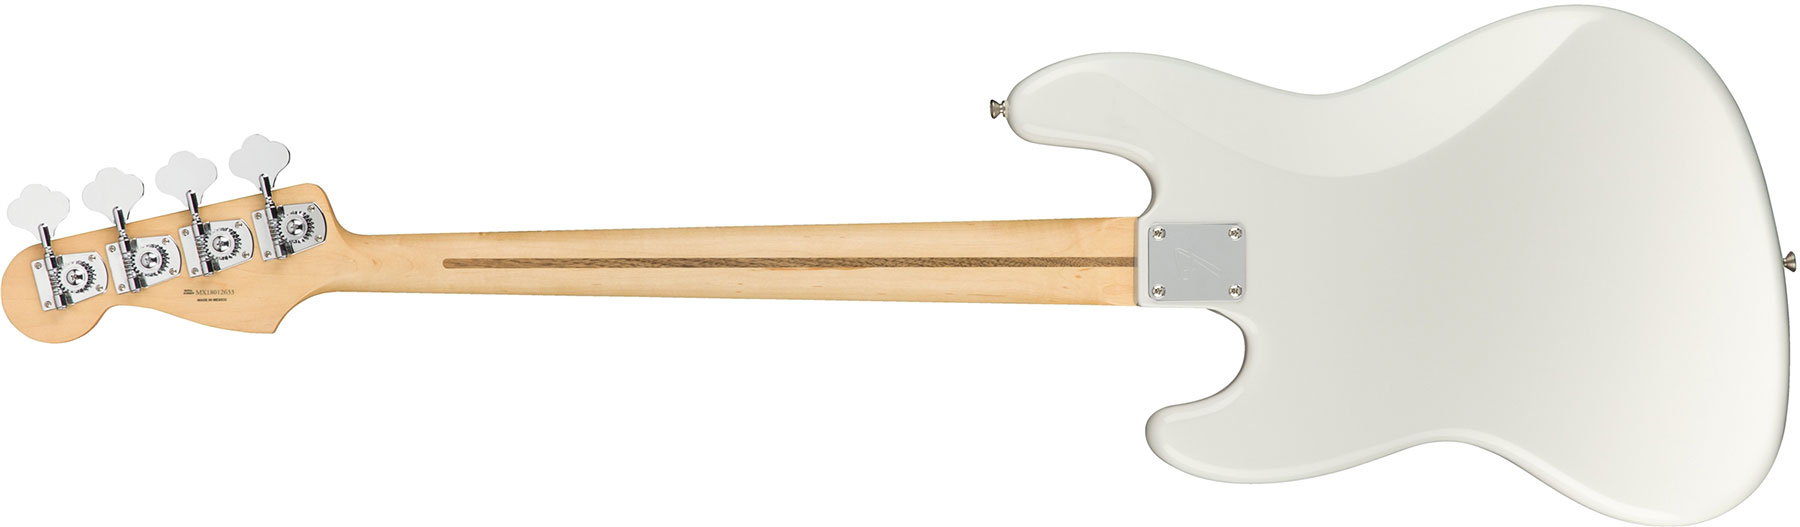 Fender Jazz Bass Player Mex Pf - Polar White - Basse Électrique Solid Body - Variation 1